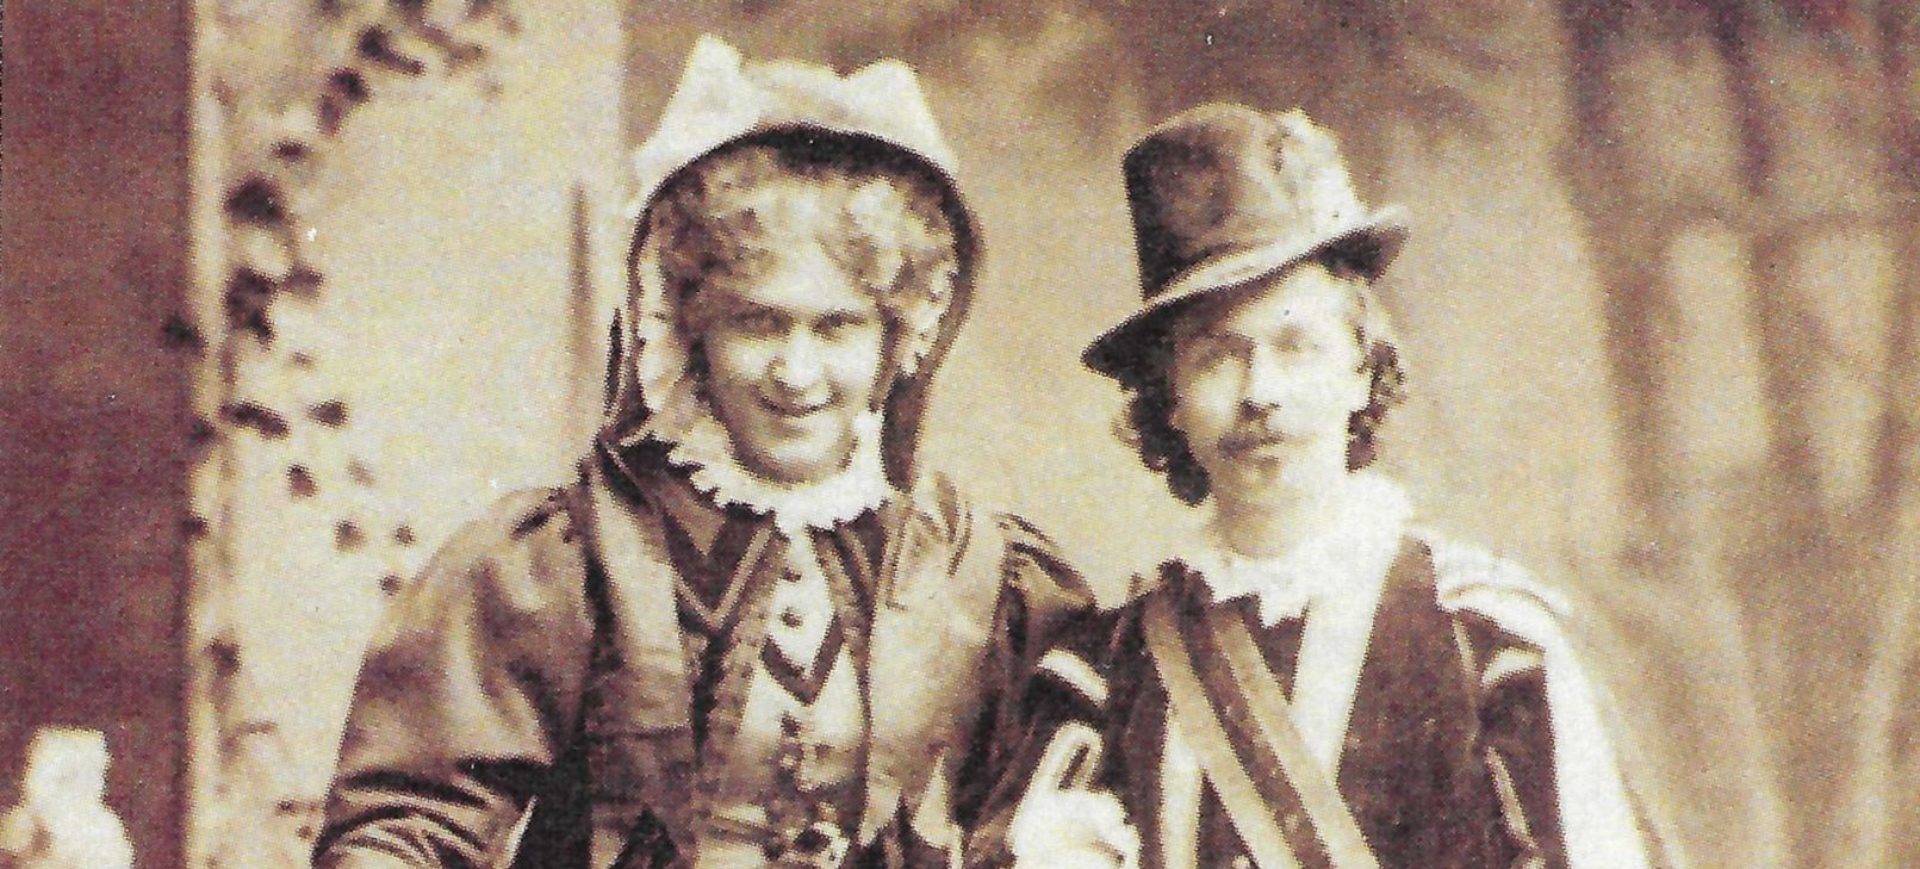 Jan un Griet - Divertissementchen 1877 - Liebespaar in historischen Kostümen